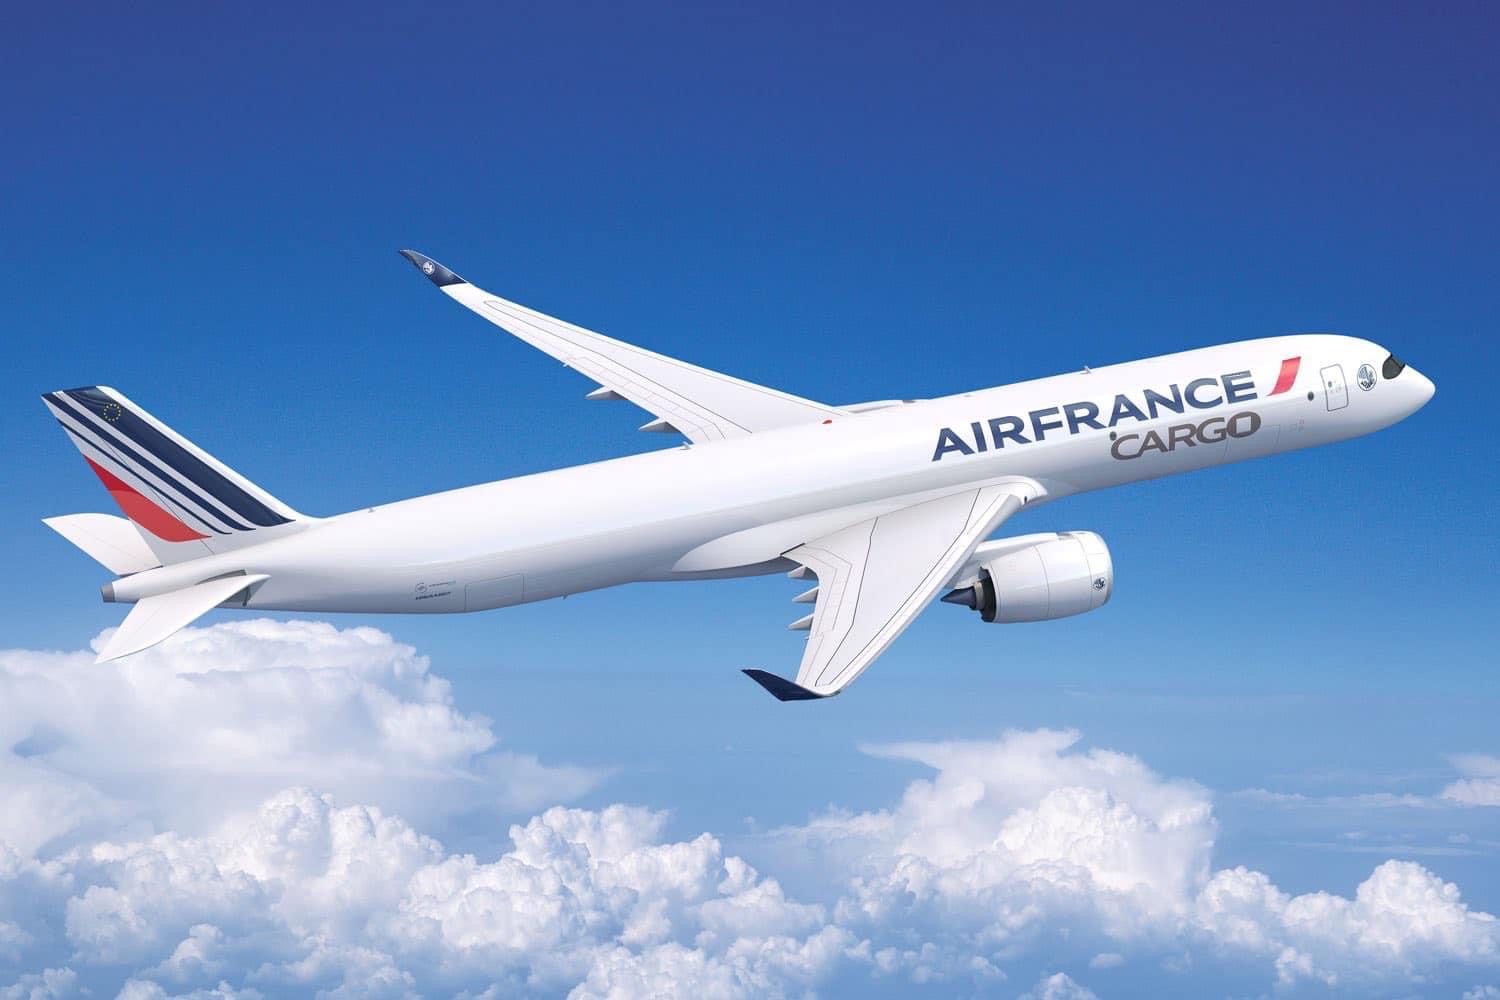 Air France Cargo (c)airfrance.com